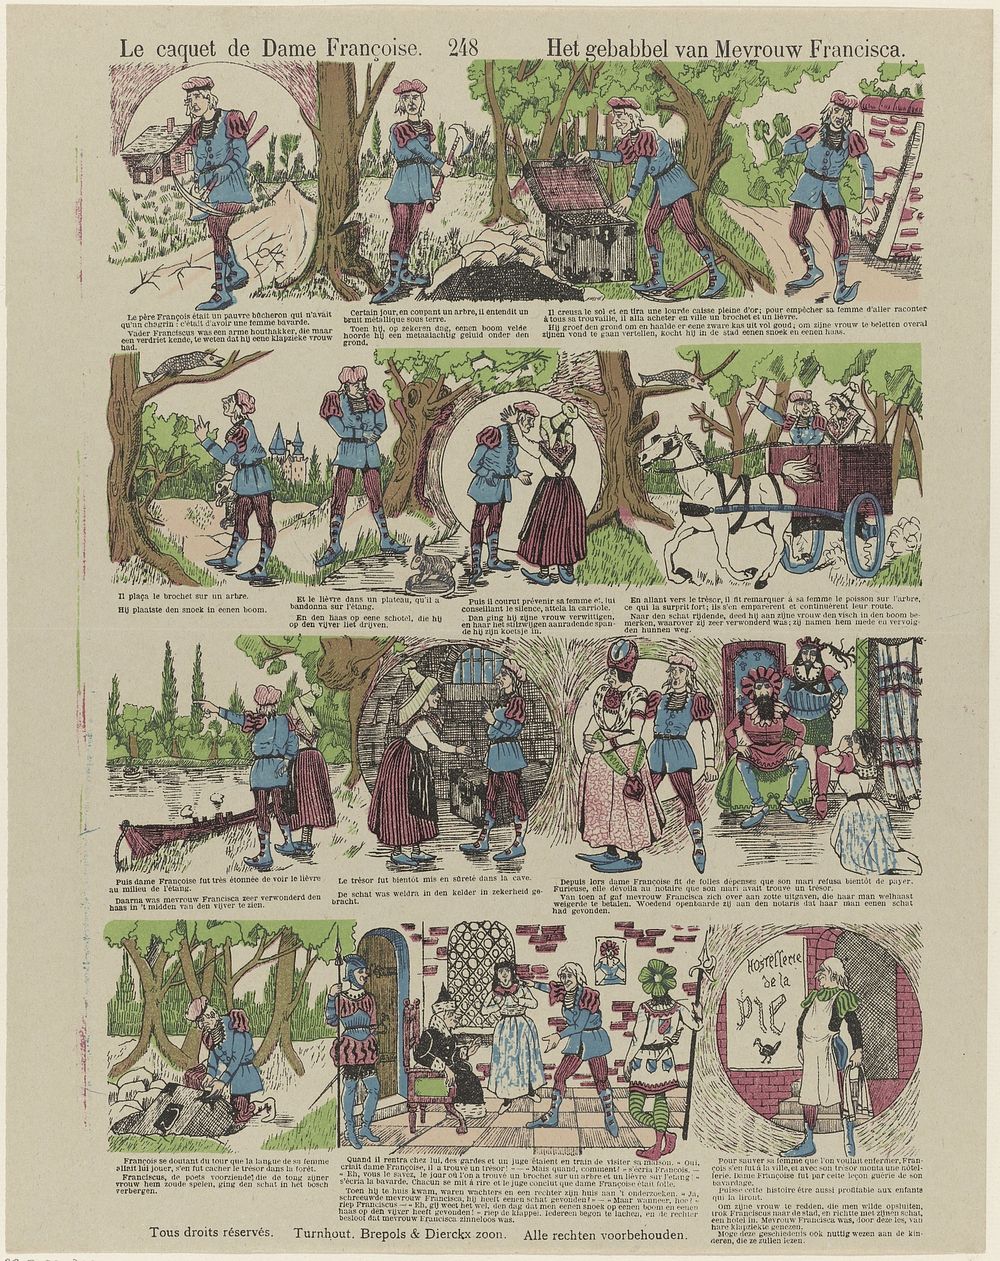 Le caquet de Dame Françoise / Het gebabbel van mevrouw Francisca (1833 - 1911) by Brepols and Dierckx zoon and anonymous